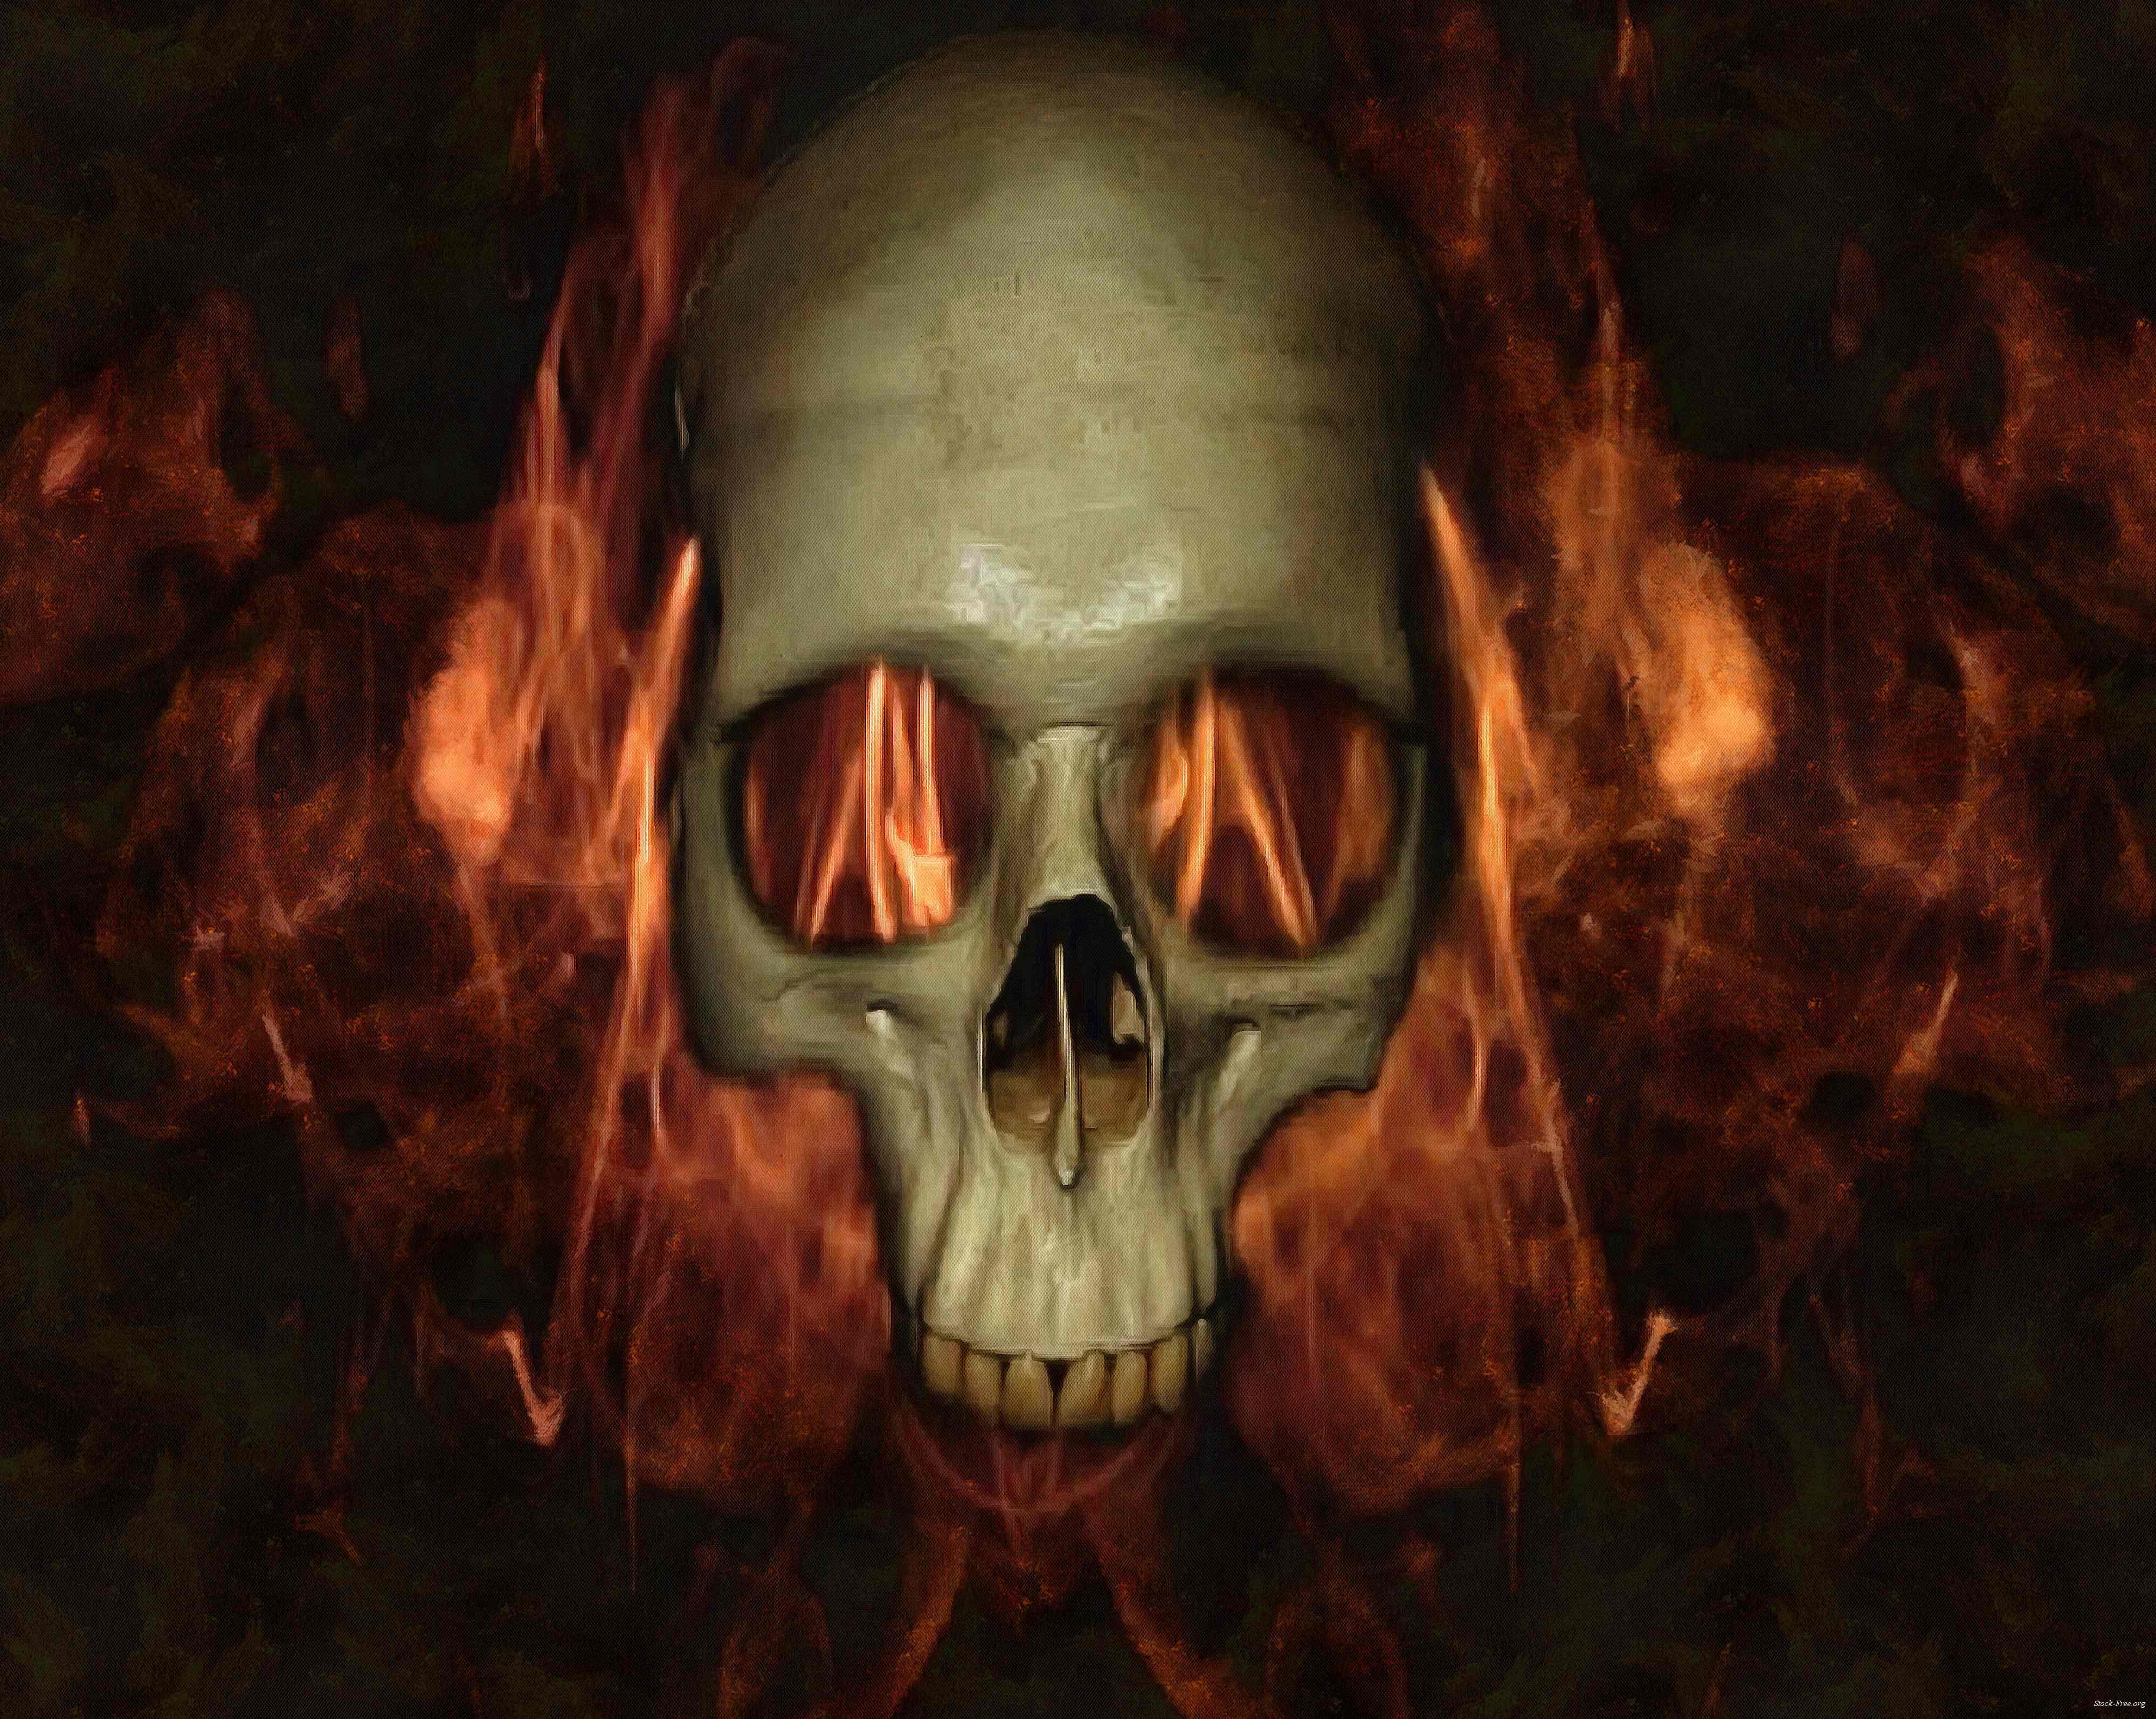 skull, head, bones, horror, halloween - halloween free image, free images, public domain images, stock free images, download image for free, halloween stock free images!